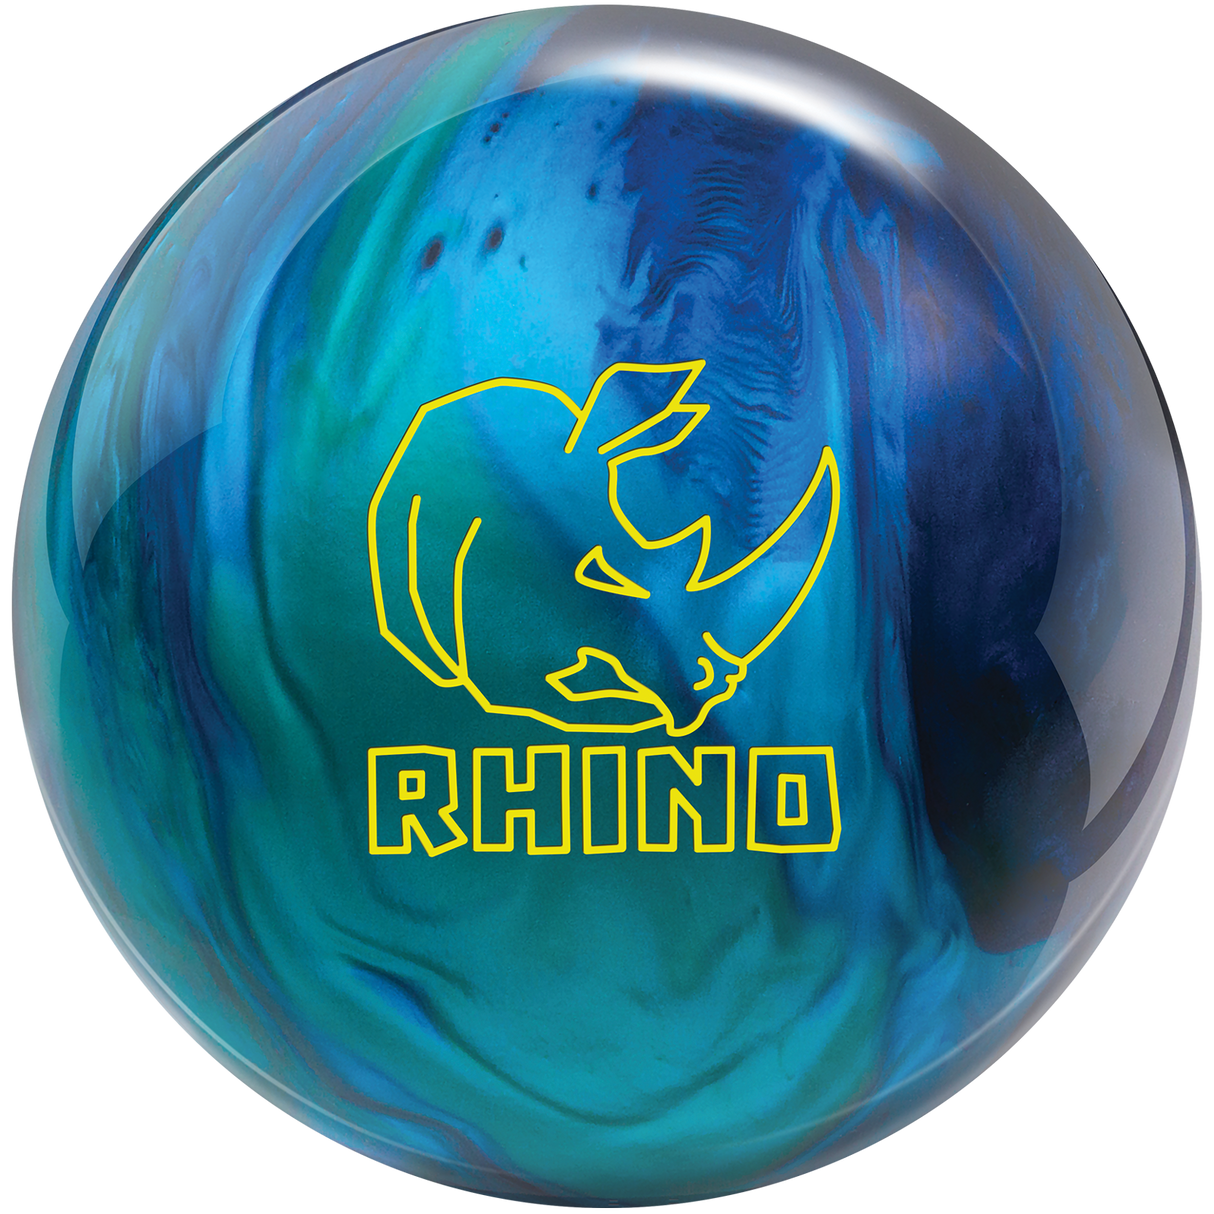 brunswick-rhino-cobalt-aqua-teal-pearl bowling ball insidebowling.com